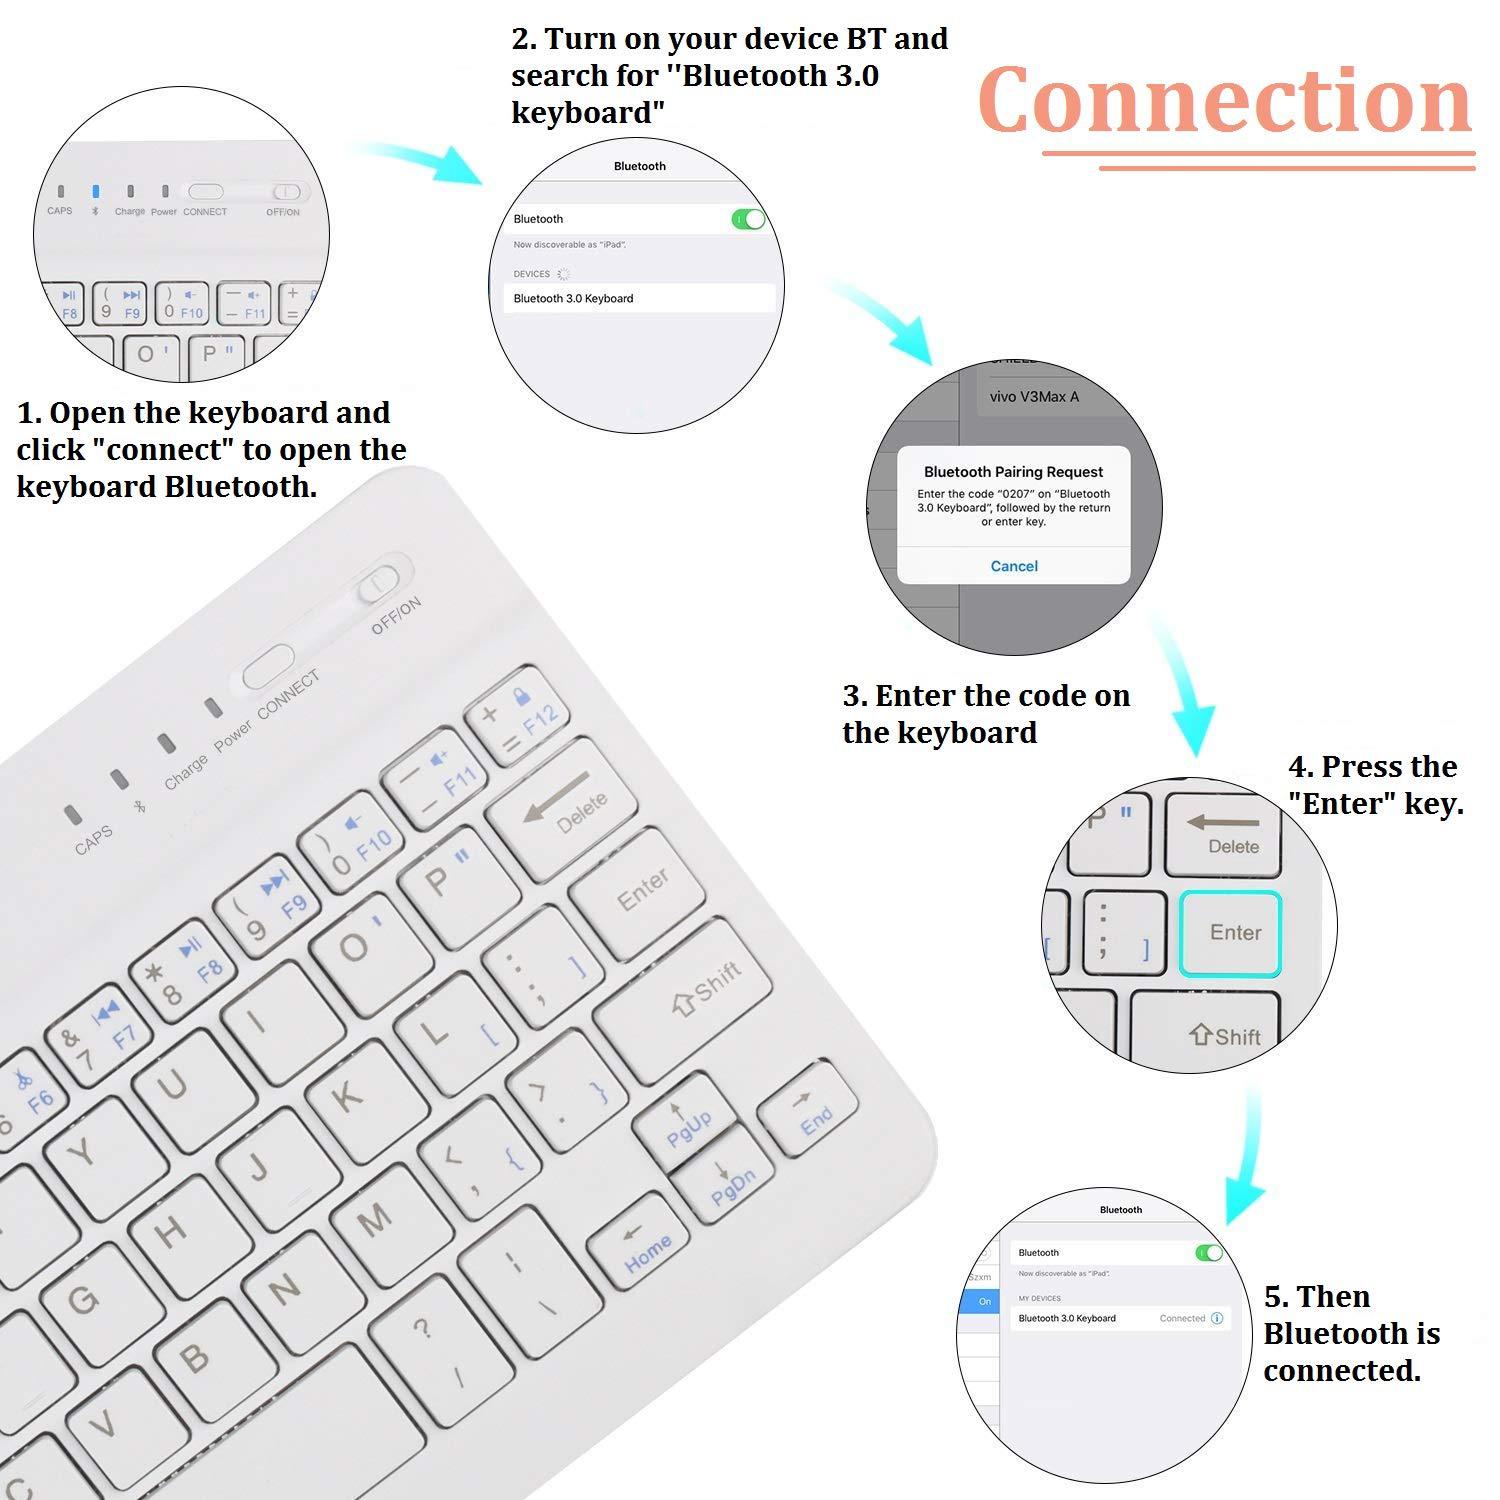 sengbirch ipad mini 5 case with keyboard, smart keyboard compatible with ipad mini 5th 2019 - ipad mini 4 - mini 3 - mini 2 &